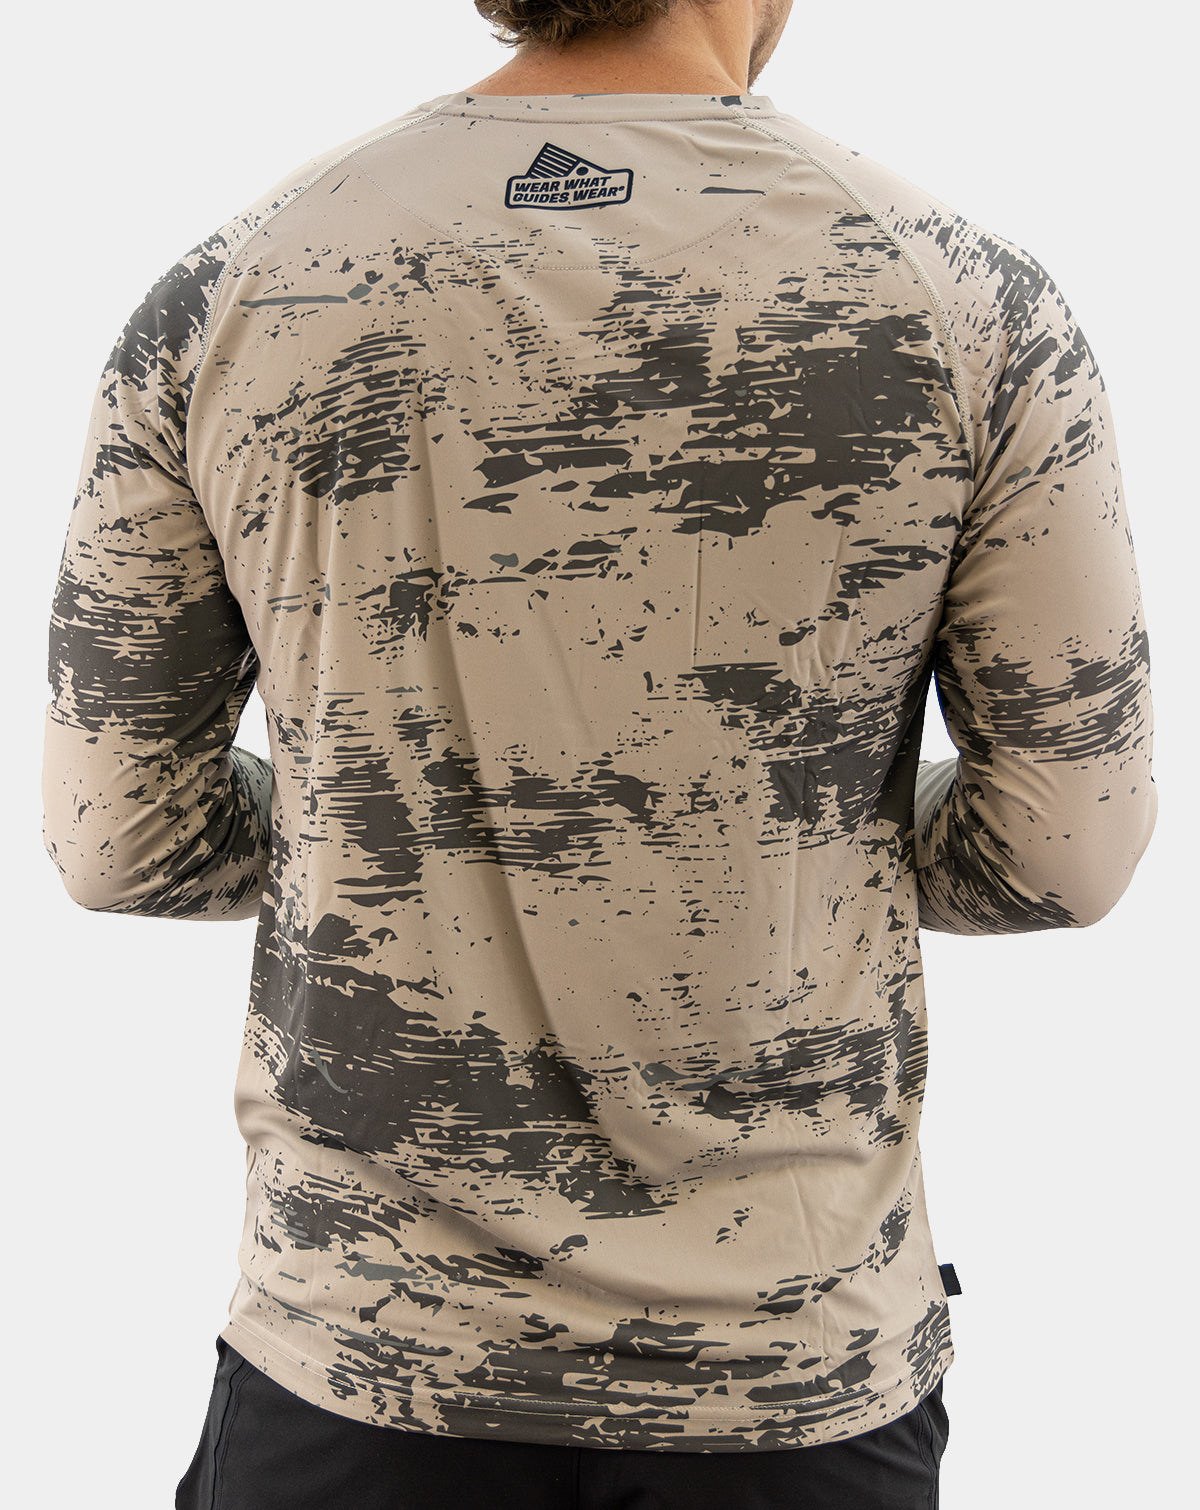 adviicd Fishing Shirts for Men Big and Tall Microfiber Comfort Grid Sport  Shirt Fashion 